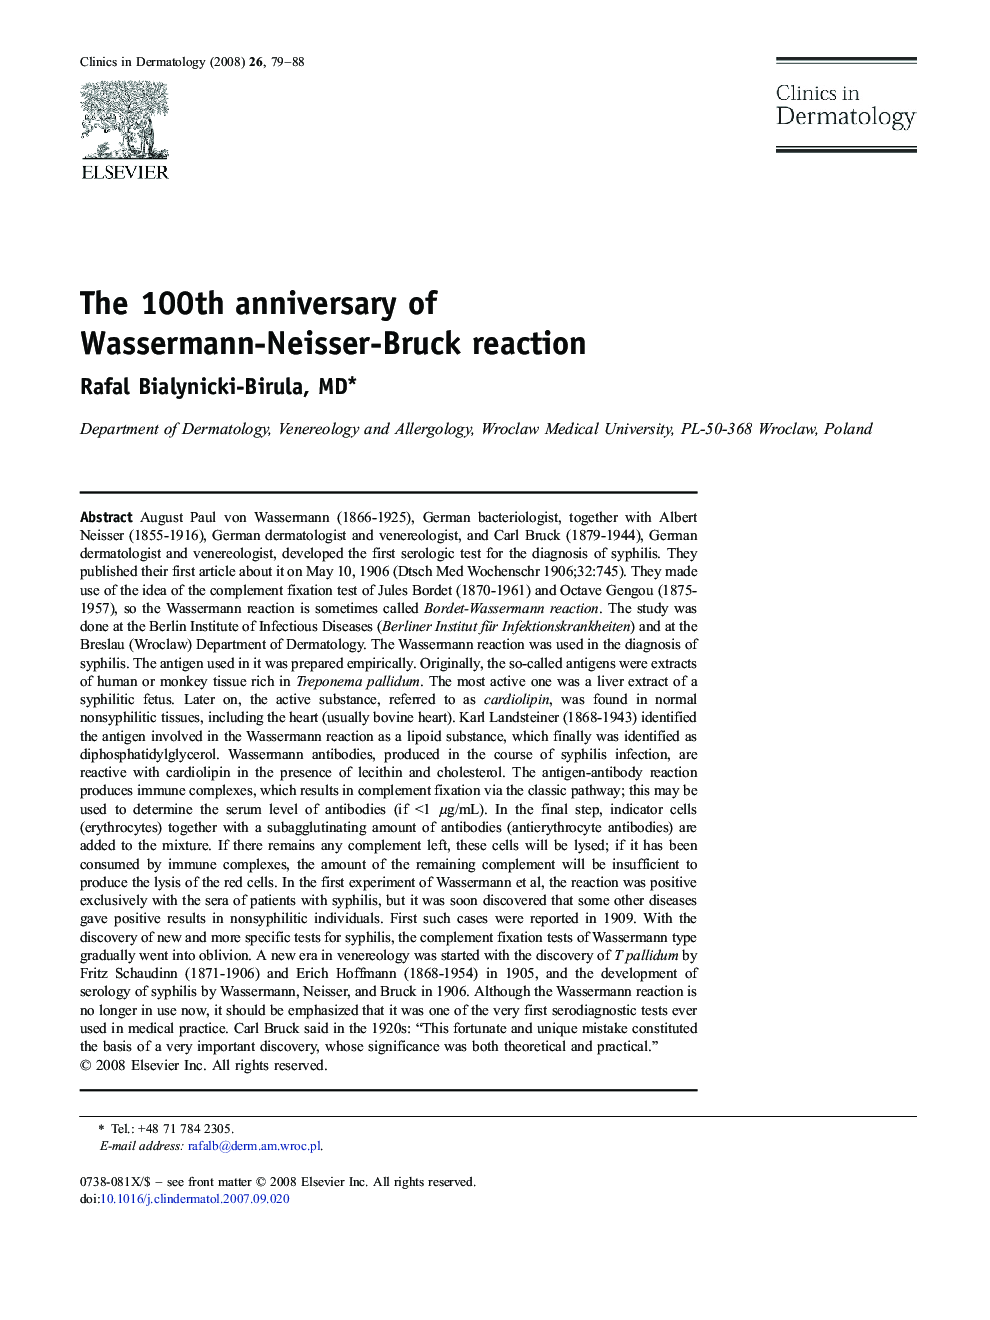 The 100th anniversary of Wassermann-Neisser-Bruck reaction